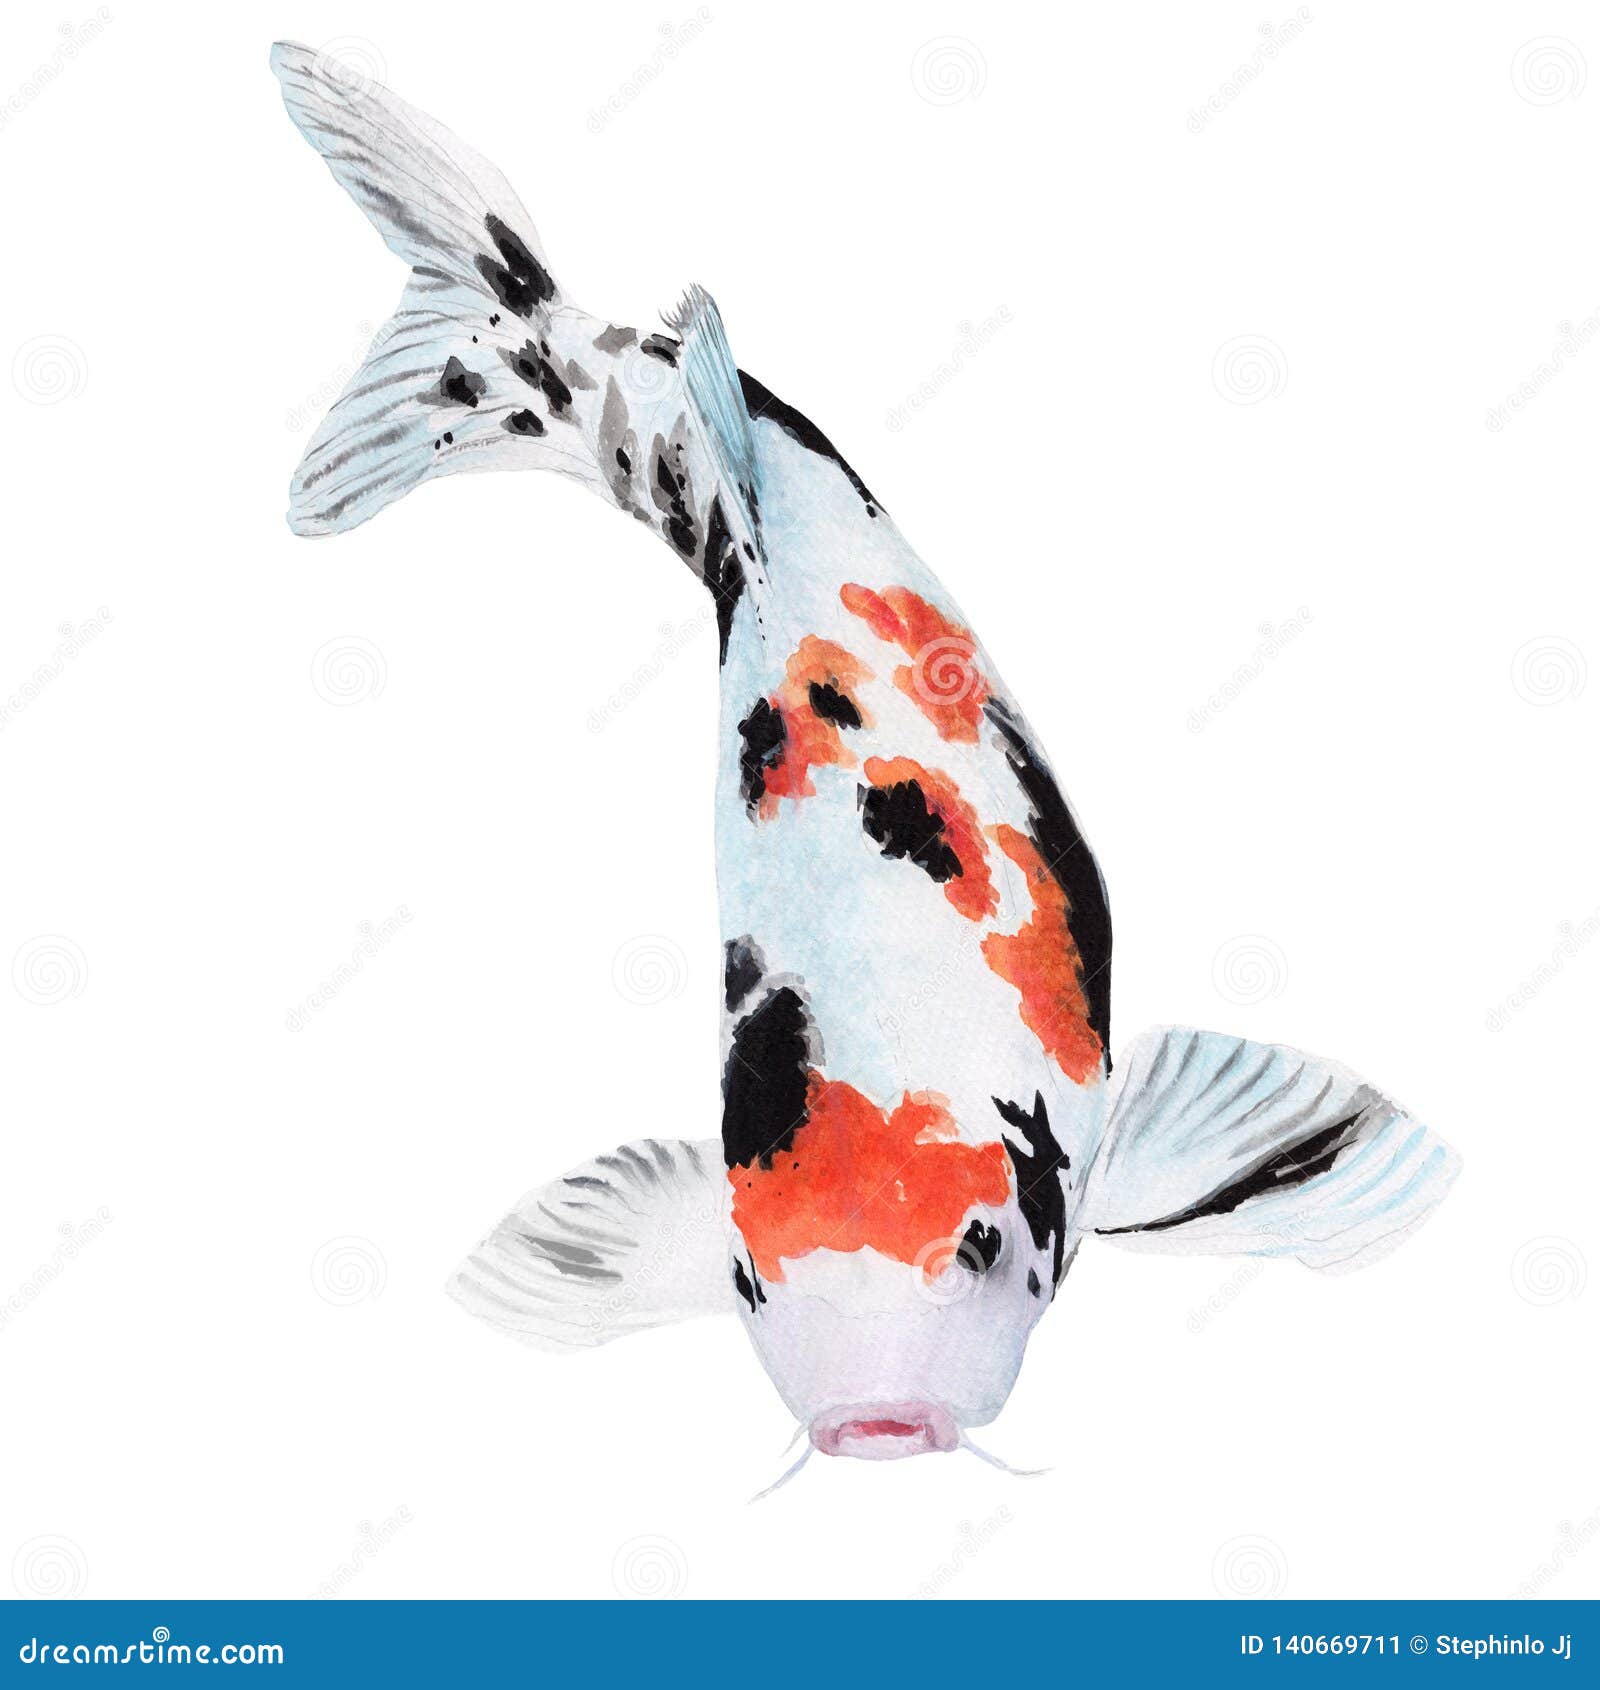 Modelo de facebook com conceito de peixe koi, estilo aquarela.